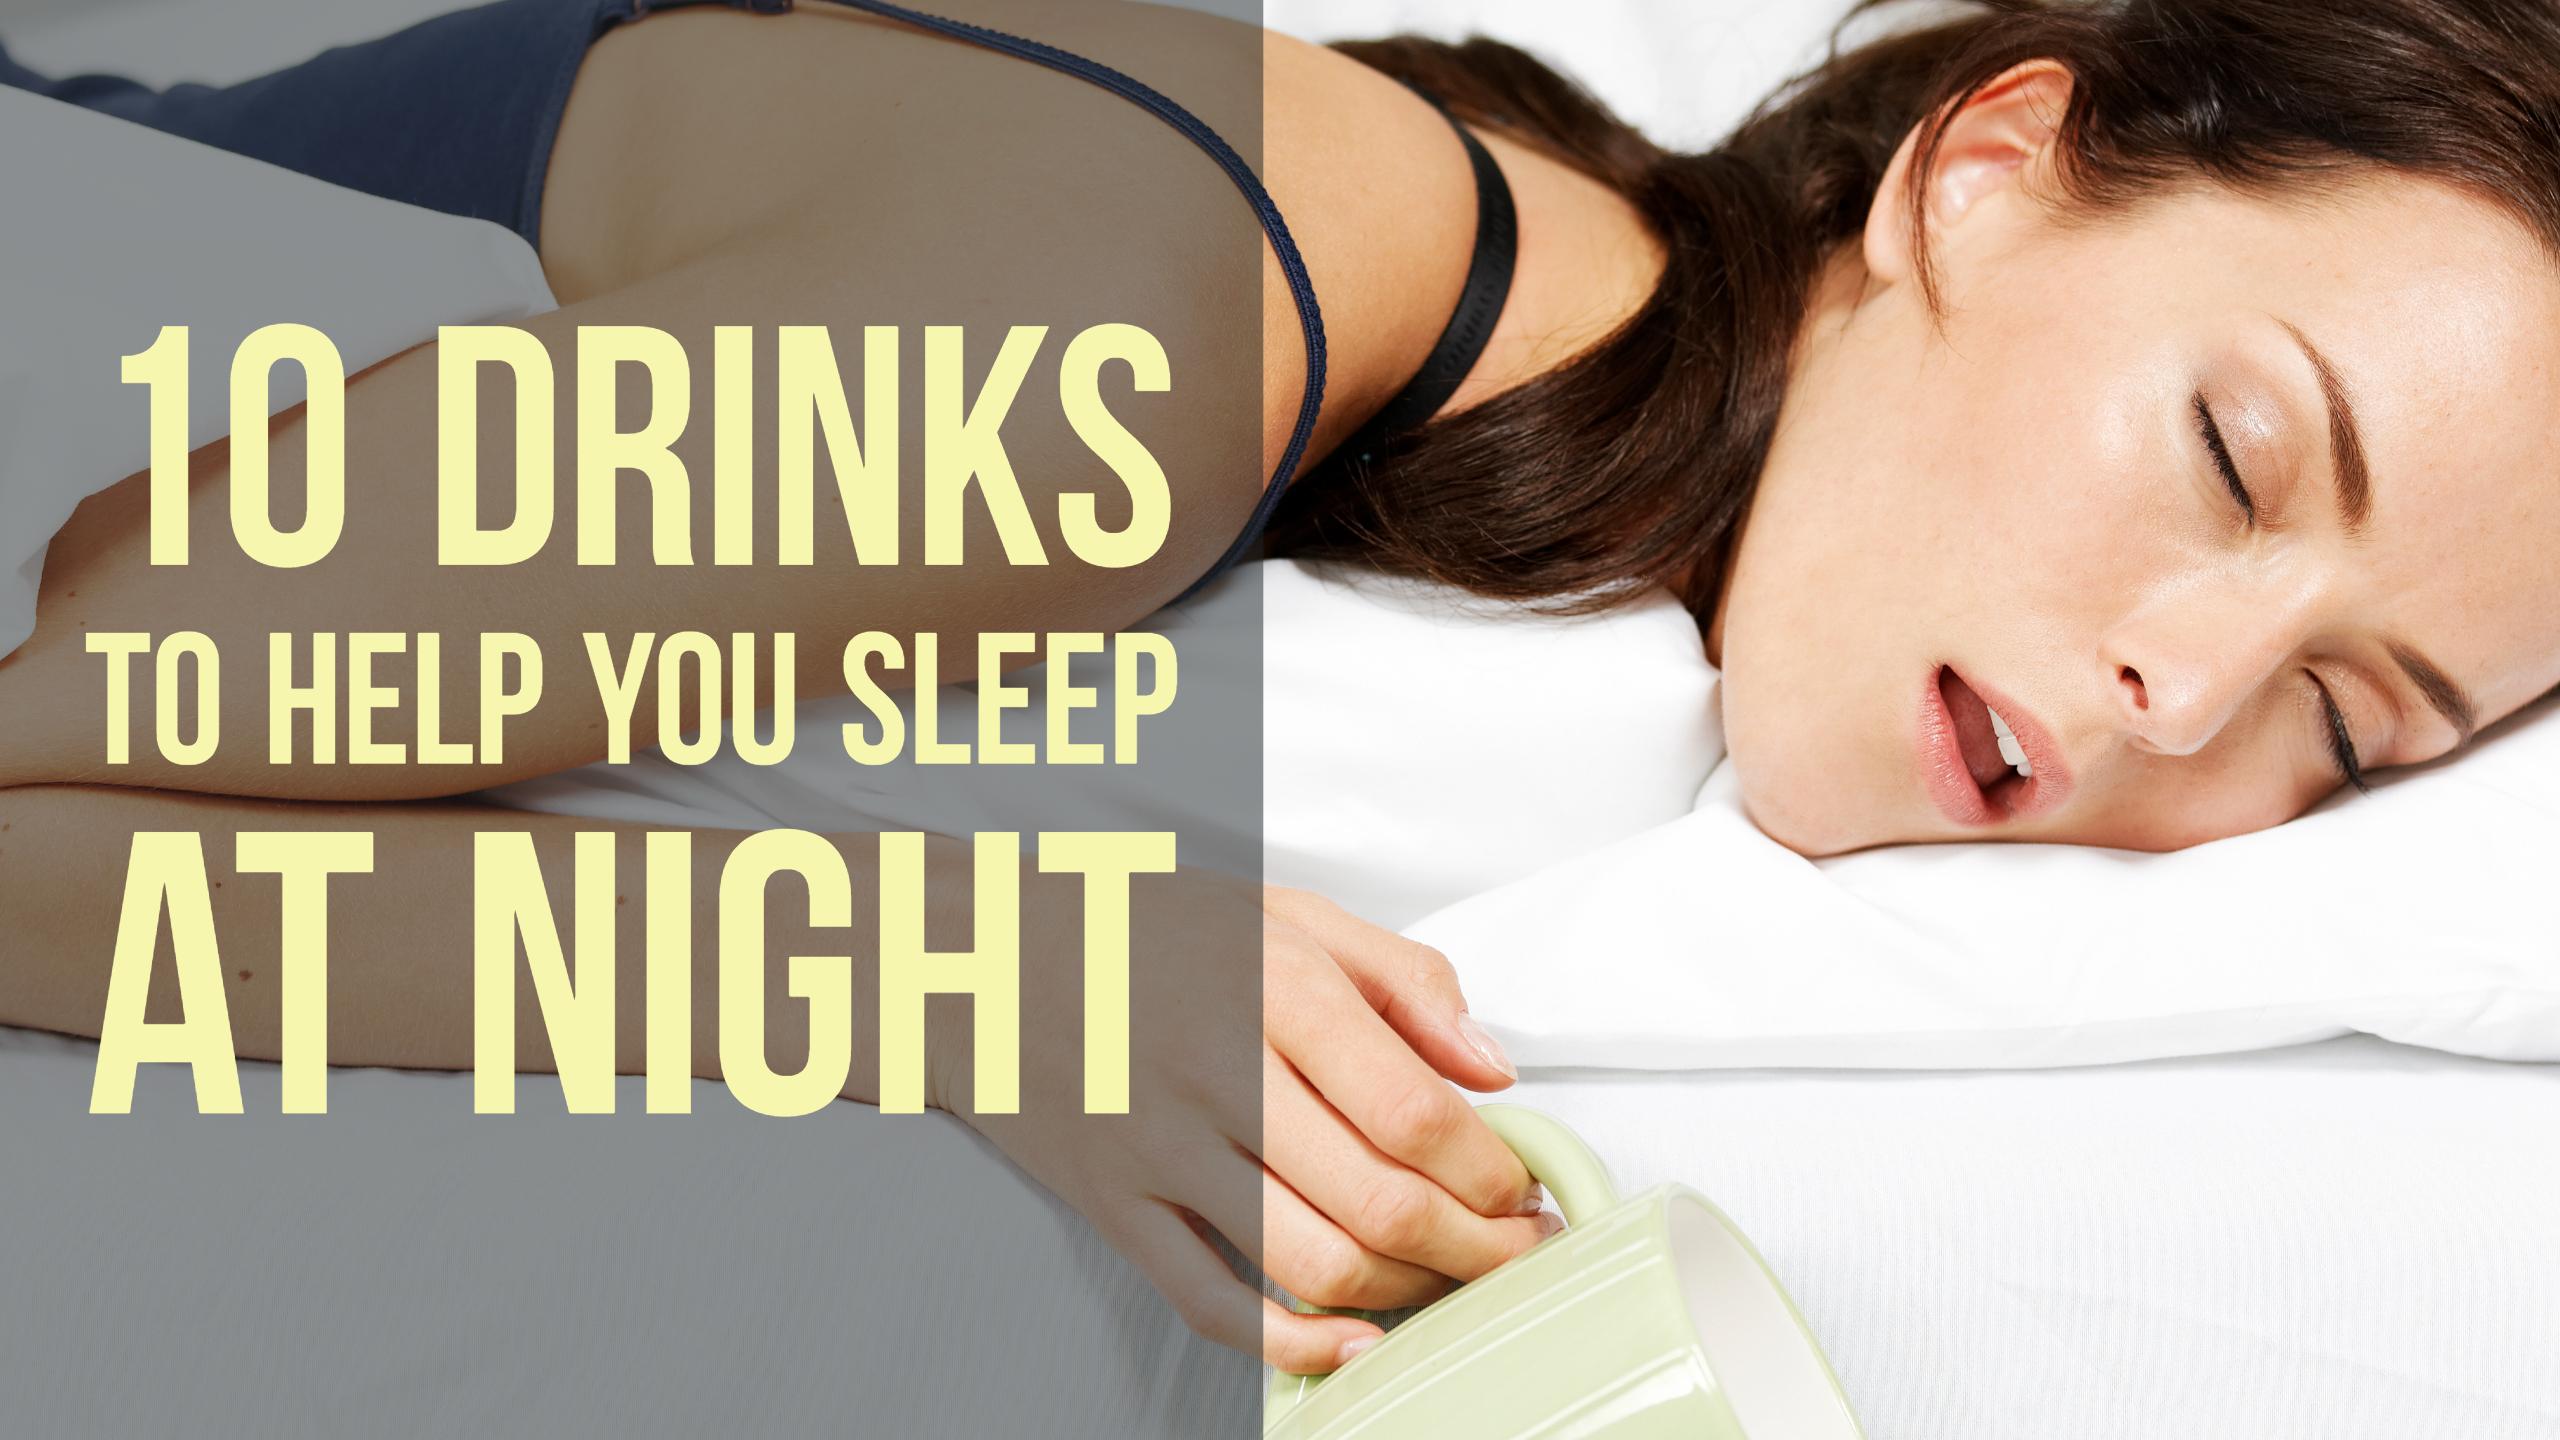 Healthy Sleep: Why You Need Sleep, How Much You Need, and How to